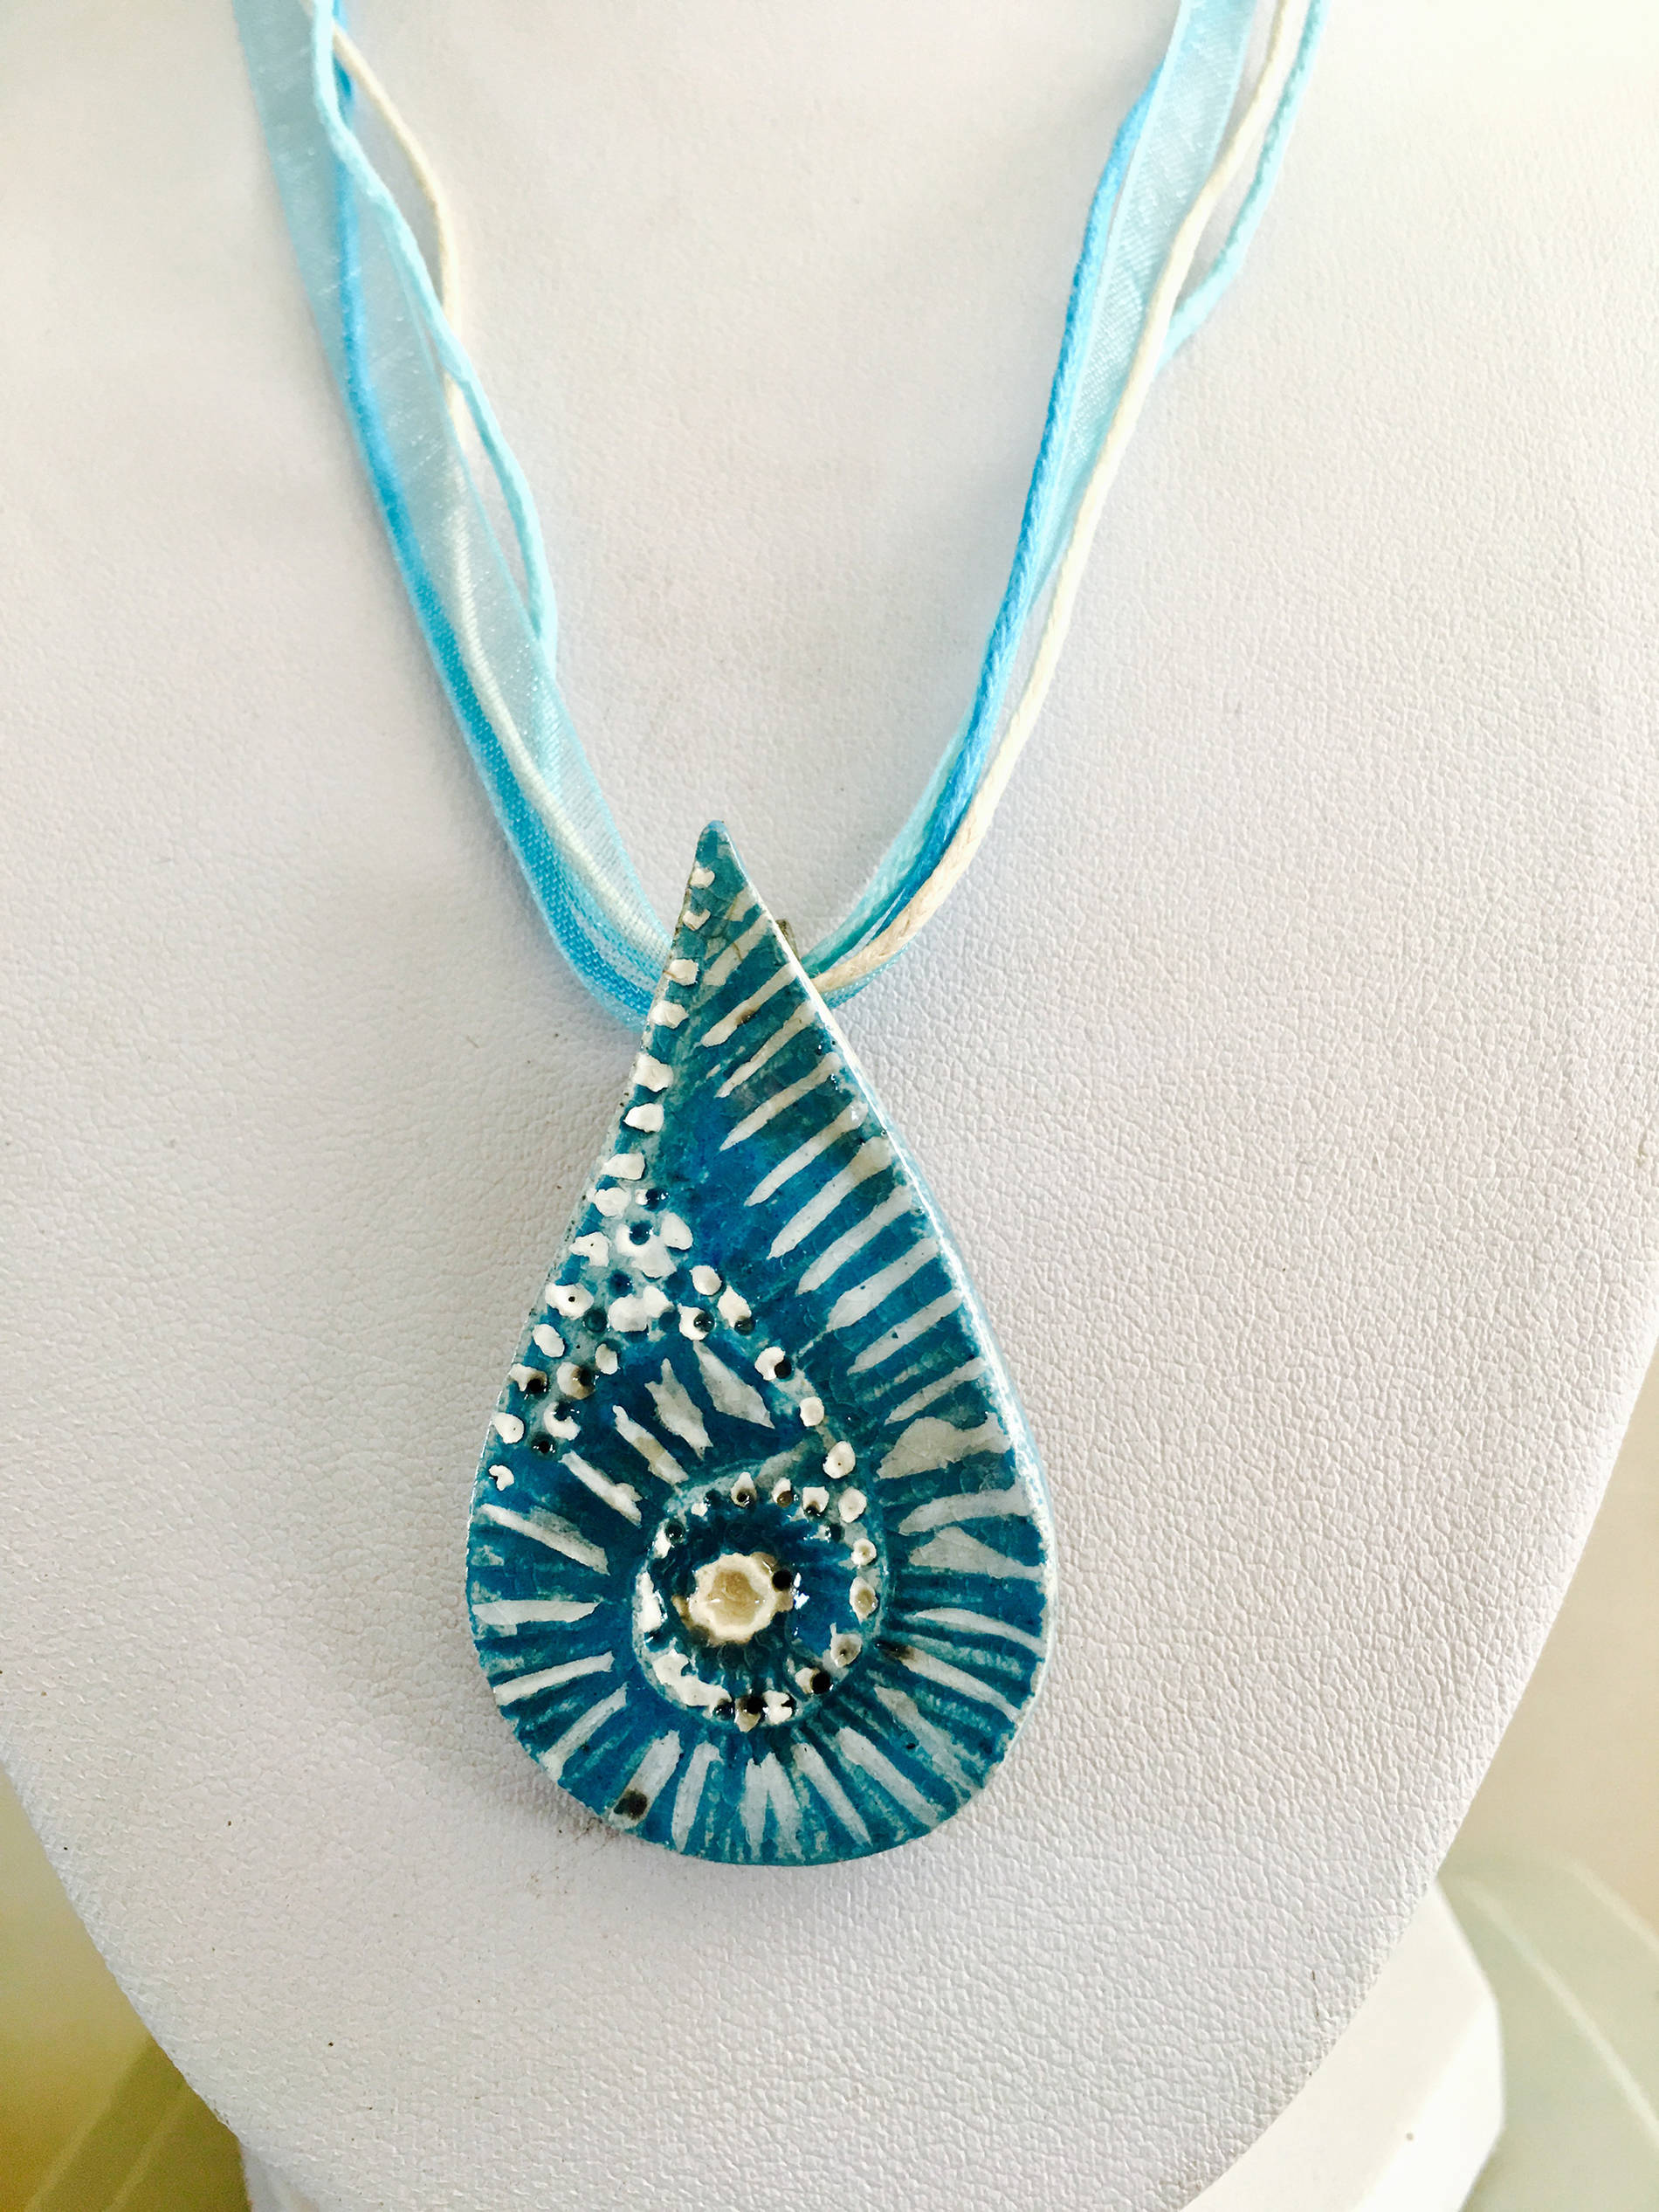 tahiti créa - Tahiti Iti créa - Rêv'claire - Médaillon céramique raku bleu turquoise motif nautilus outre-mer